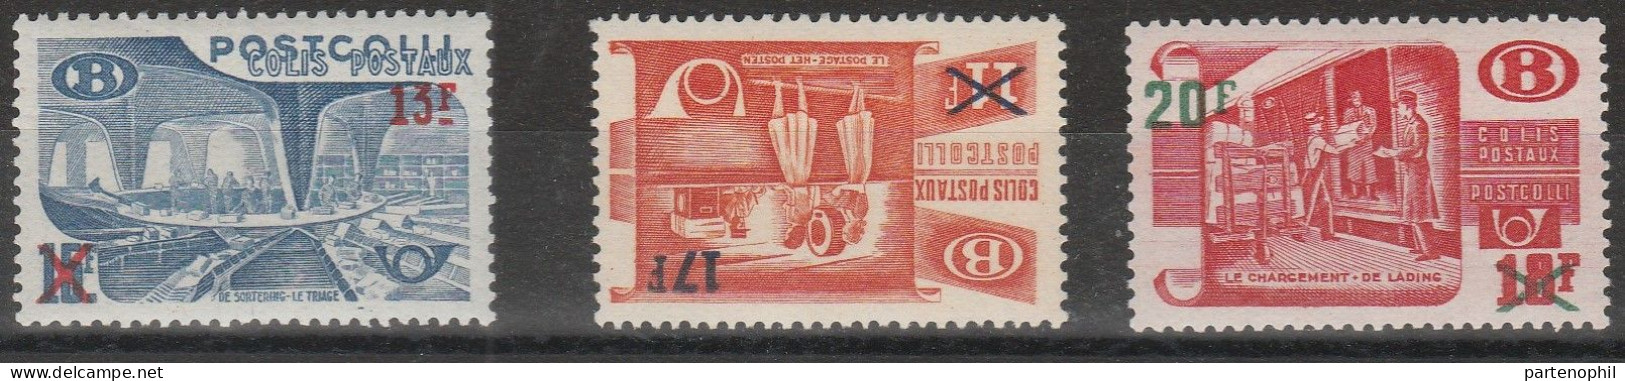 449 Belgio Belgium 1953 - Pacchi Postali - Smistamento Postale N. 331/33. Cat. € 105,00MNH - Mint